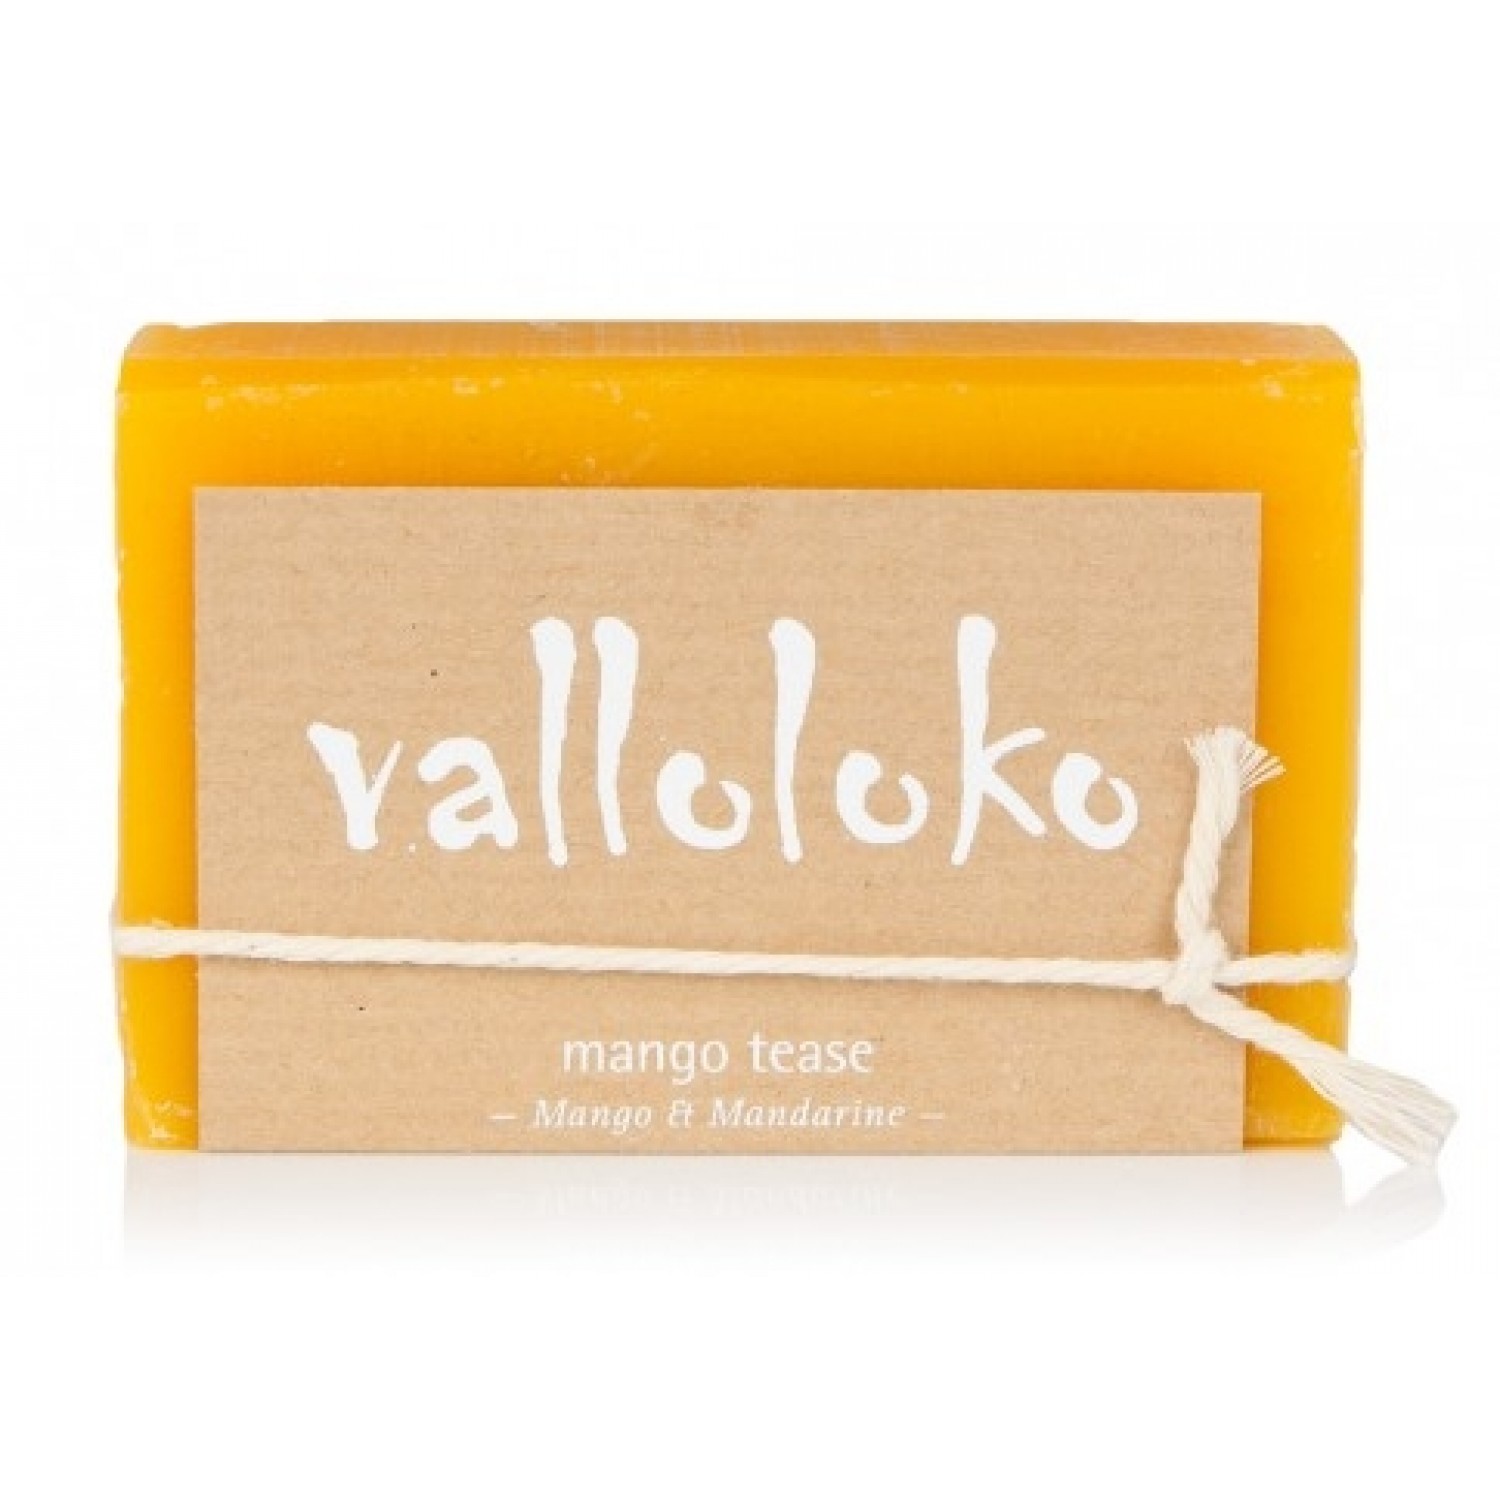 Vegan Body Soap Mango Tease with Citrus Notes | Valloloko